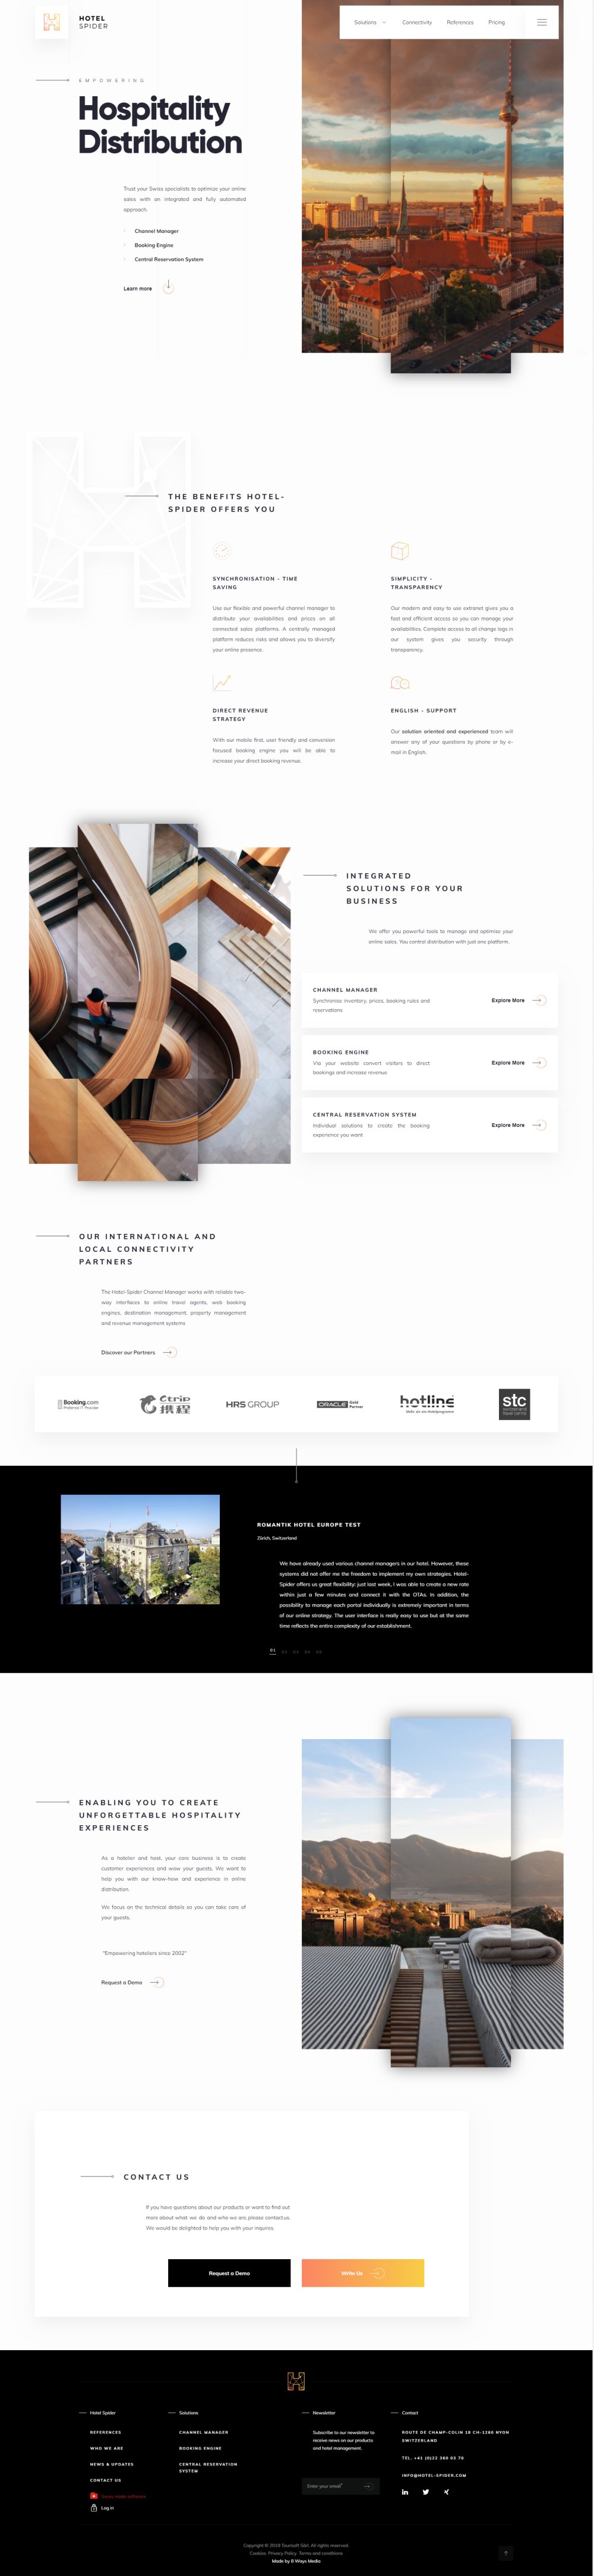 Hotel Web Design Inspiration